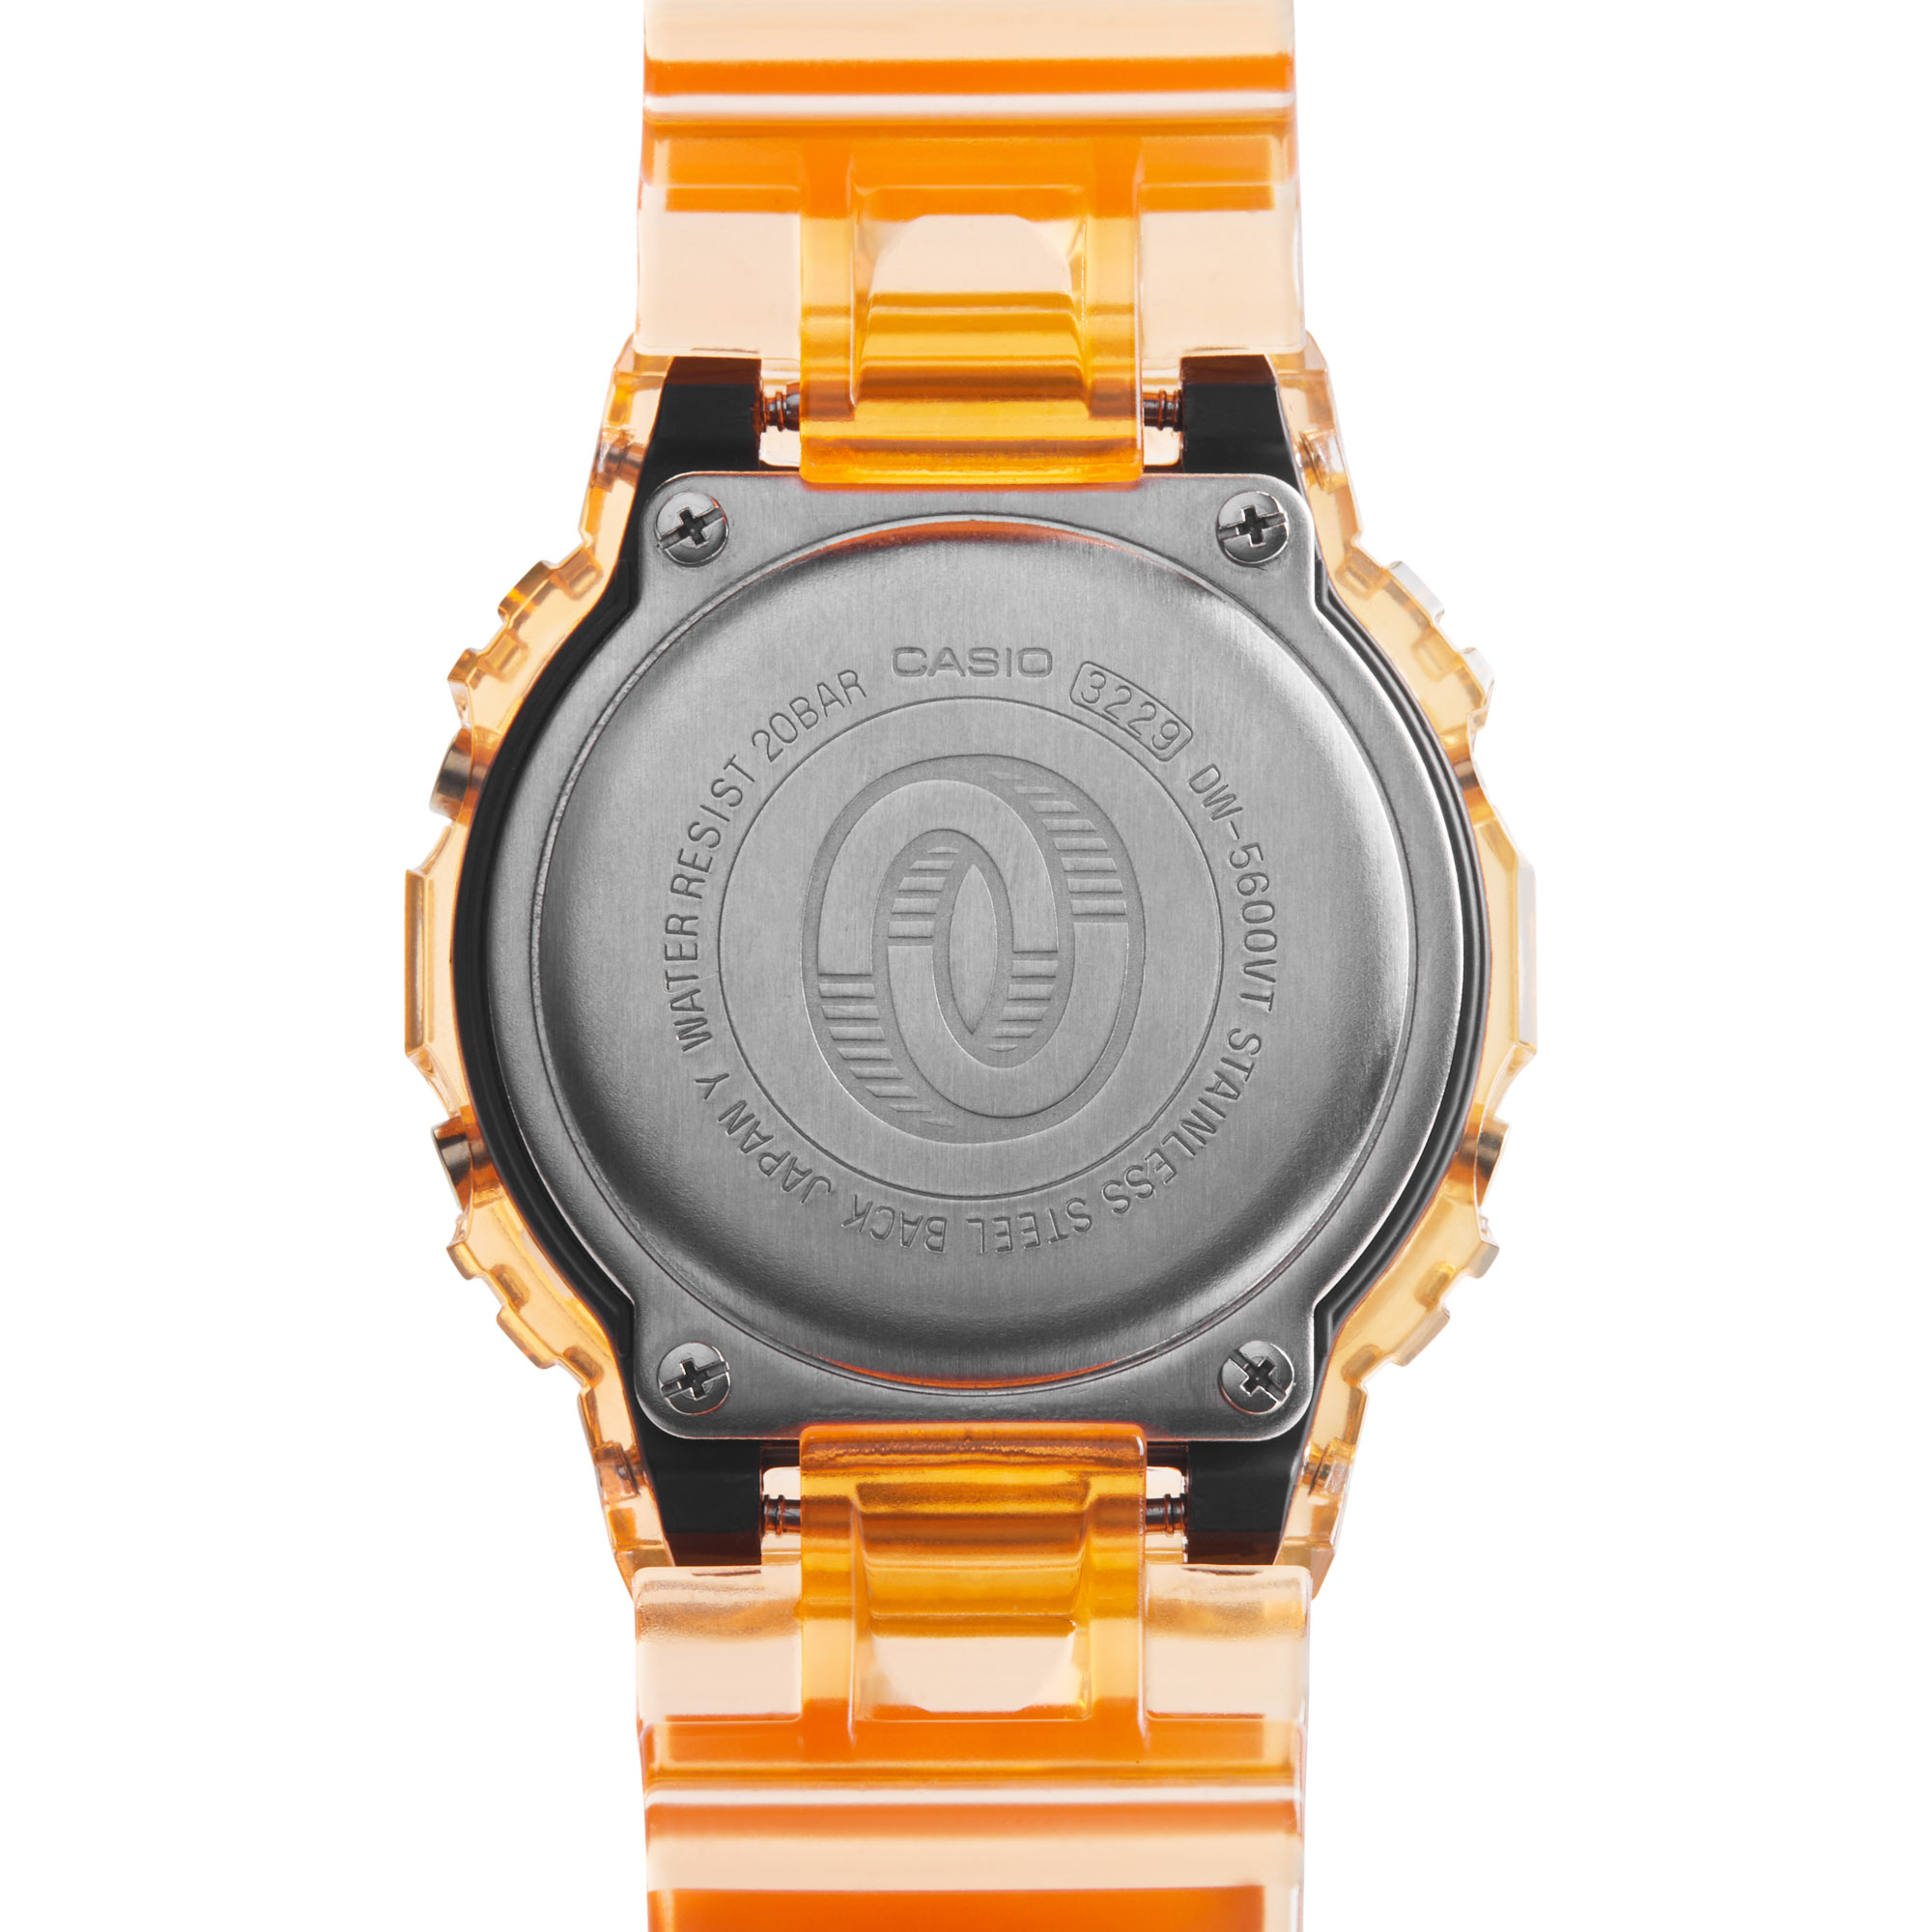 卡西欧G-Shock系列DW5600ONS234轻质树脂结构款式手表推荐